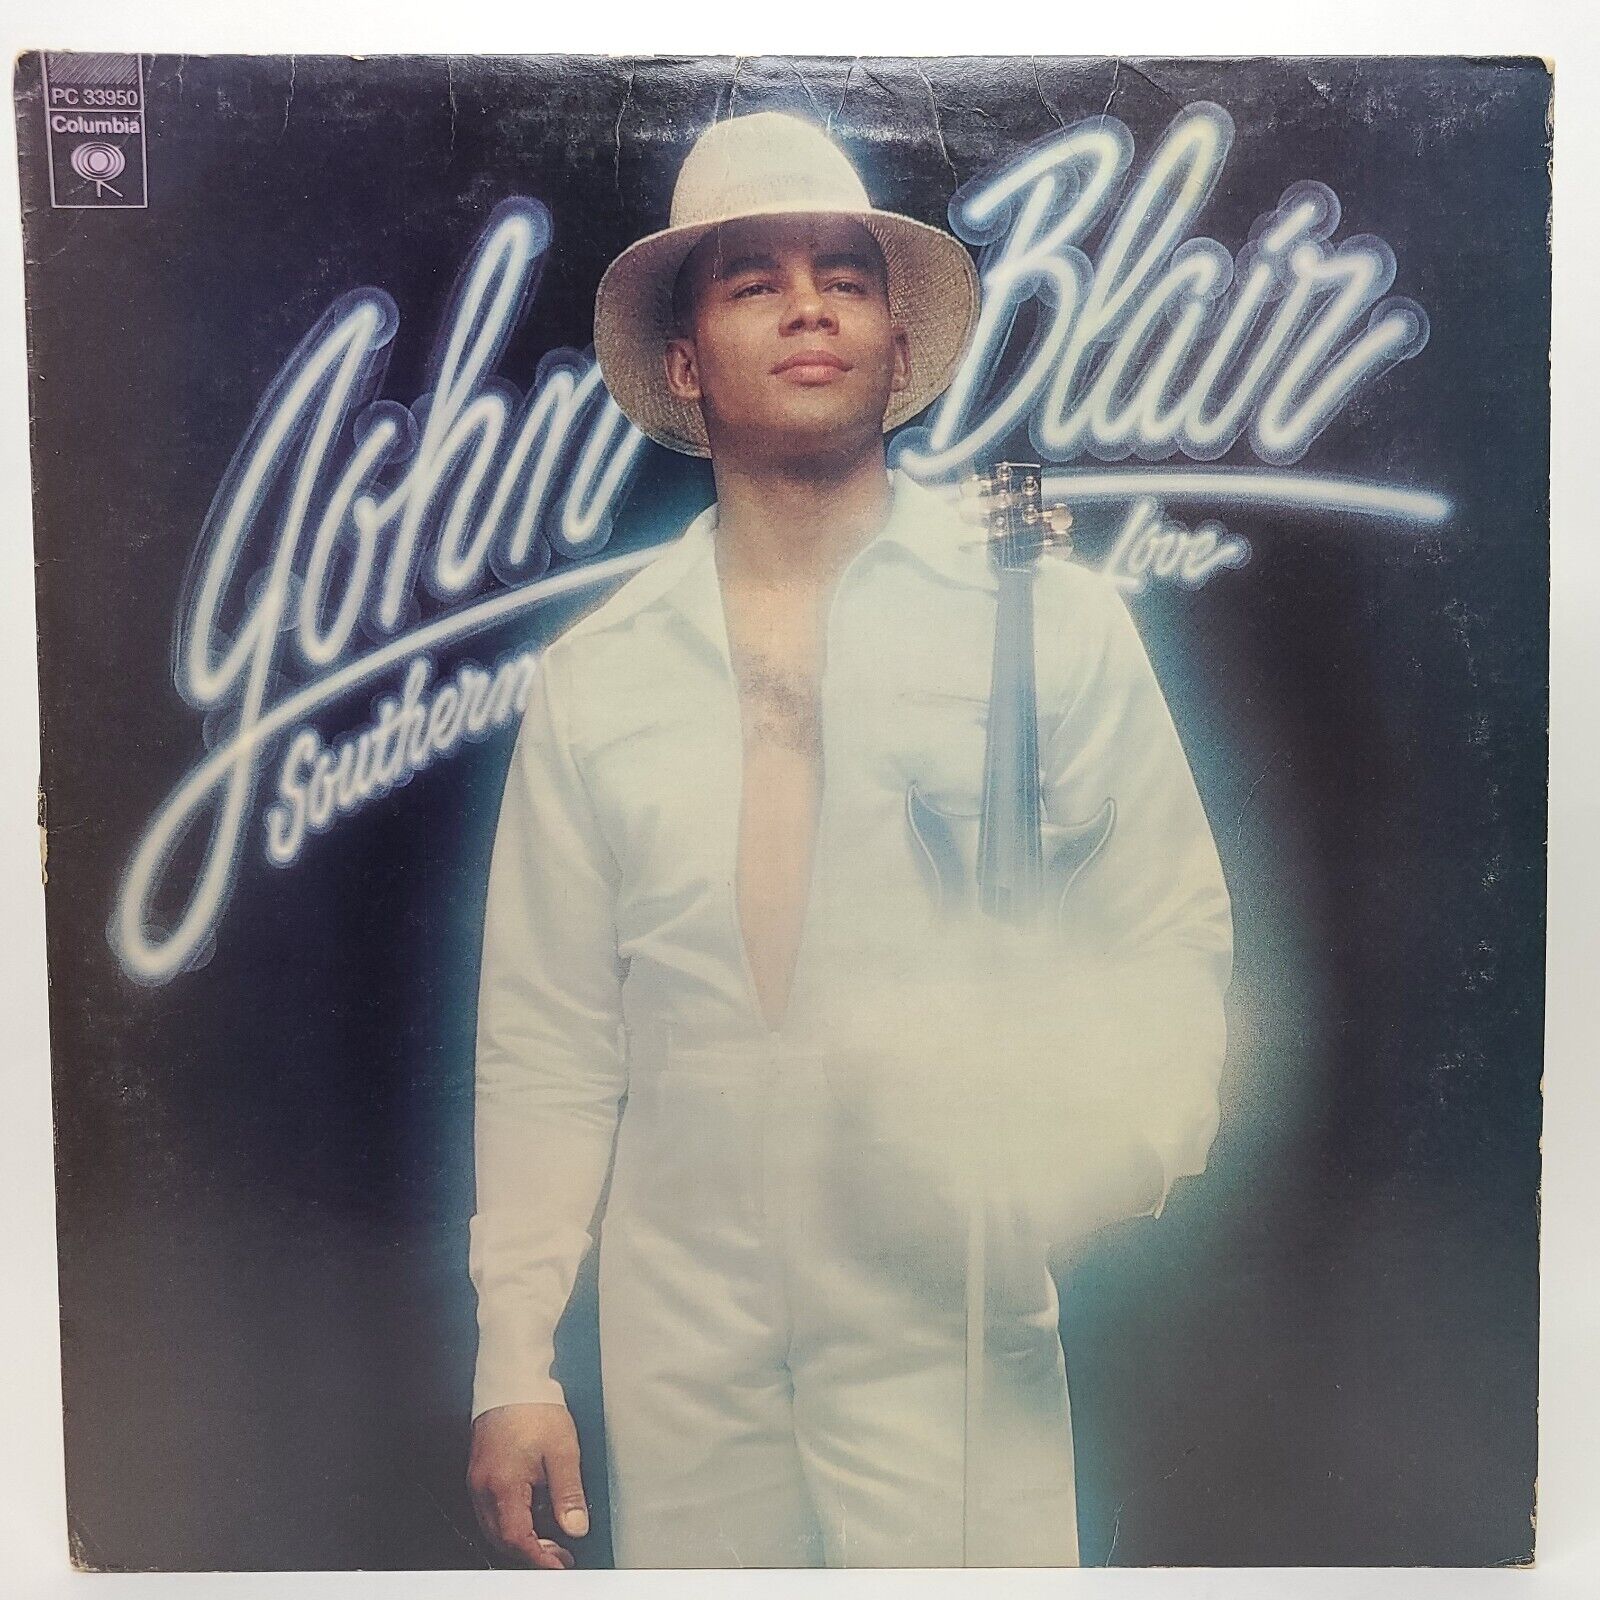 John Blair - Southern Love Vinyl LP 1976 (PC 33950) Columbia Records VERY GOOD